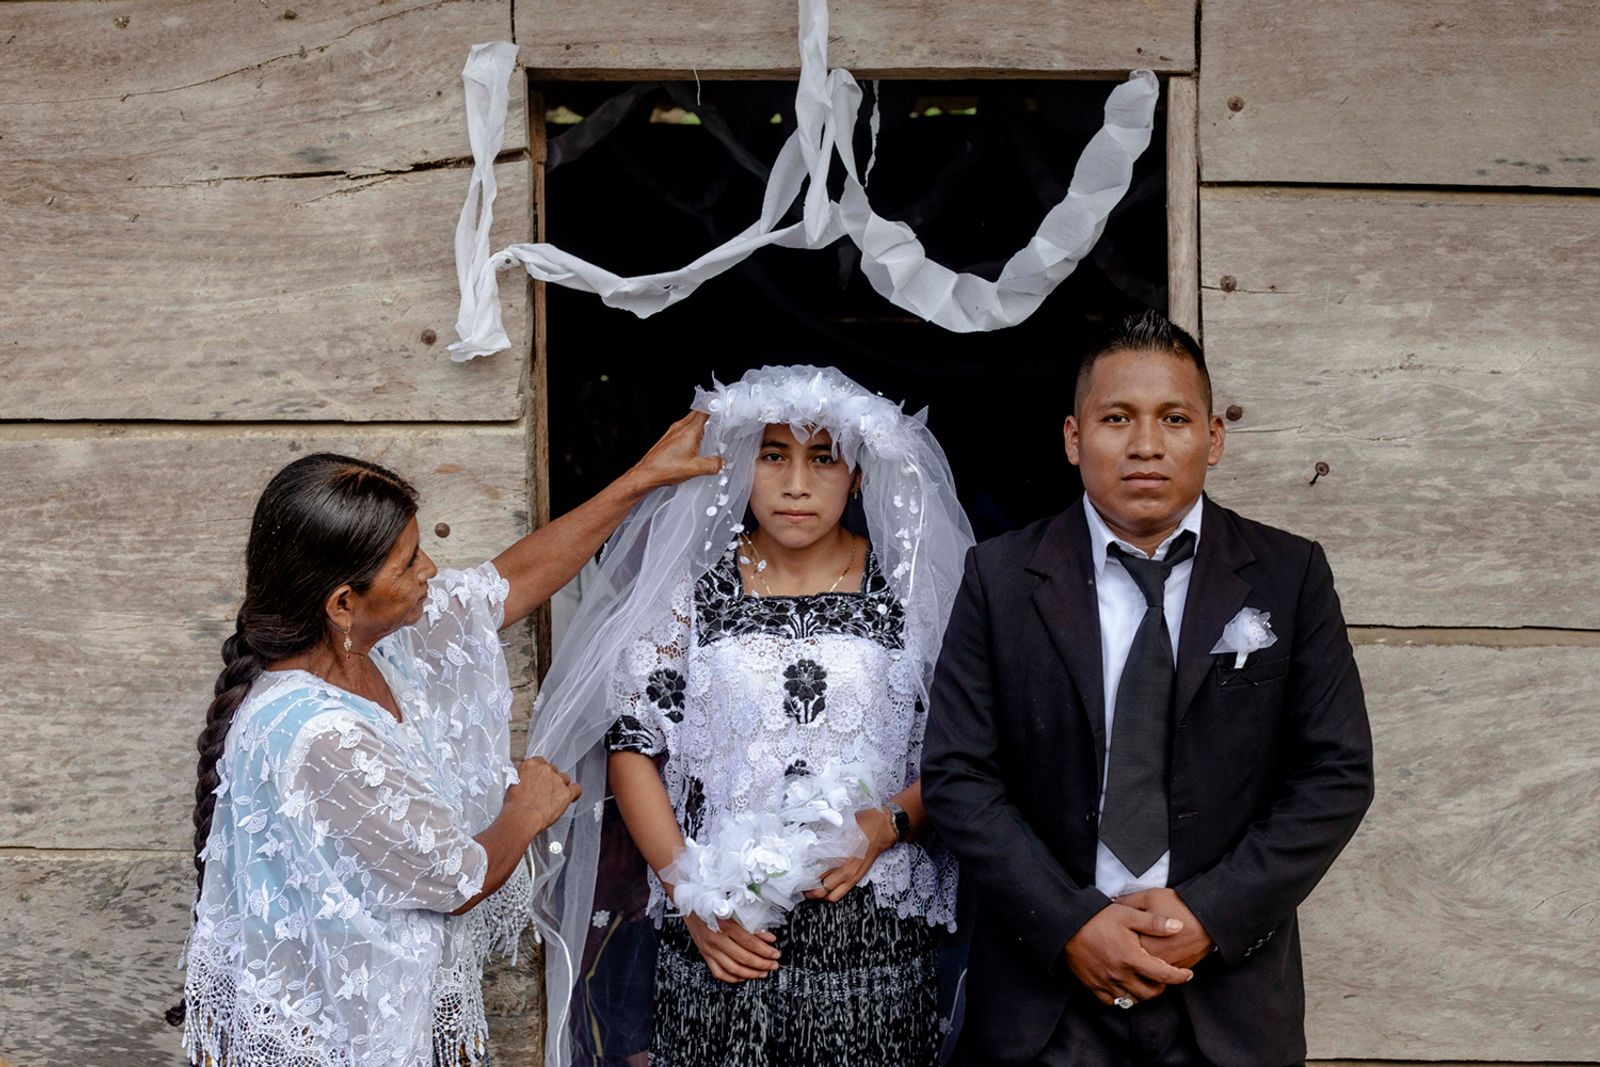 © Fred Ramos - Wedding of Gladis Rash, 18, and Alexander Caal, 22, in Las Muñecas village, Guatemala. June 2019. Fred Ramos